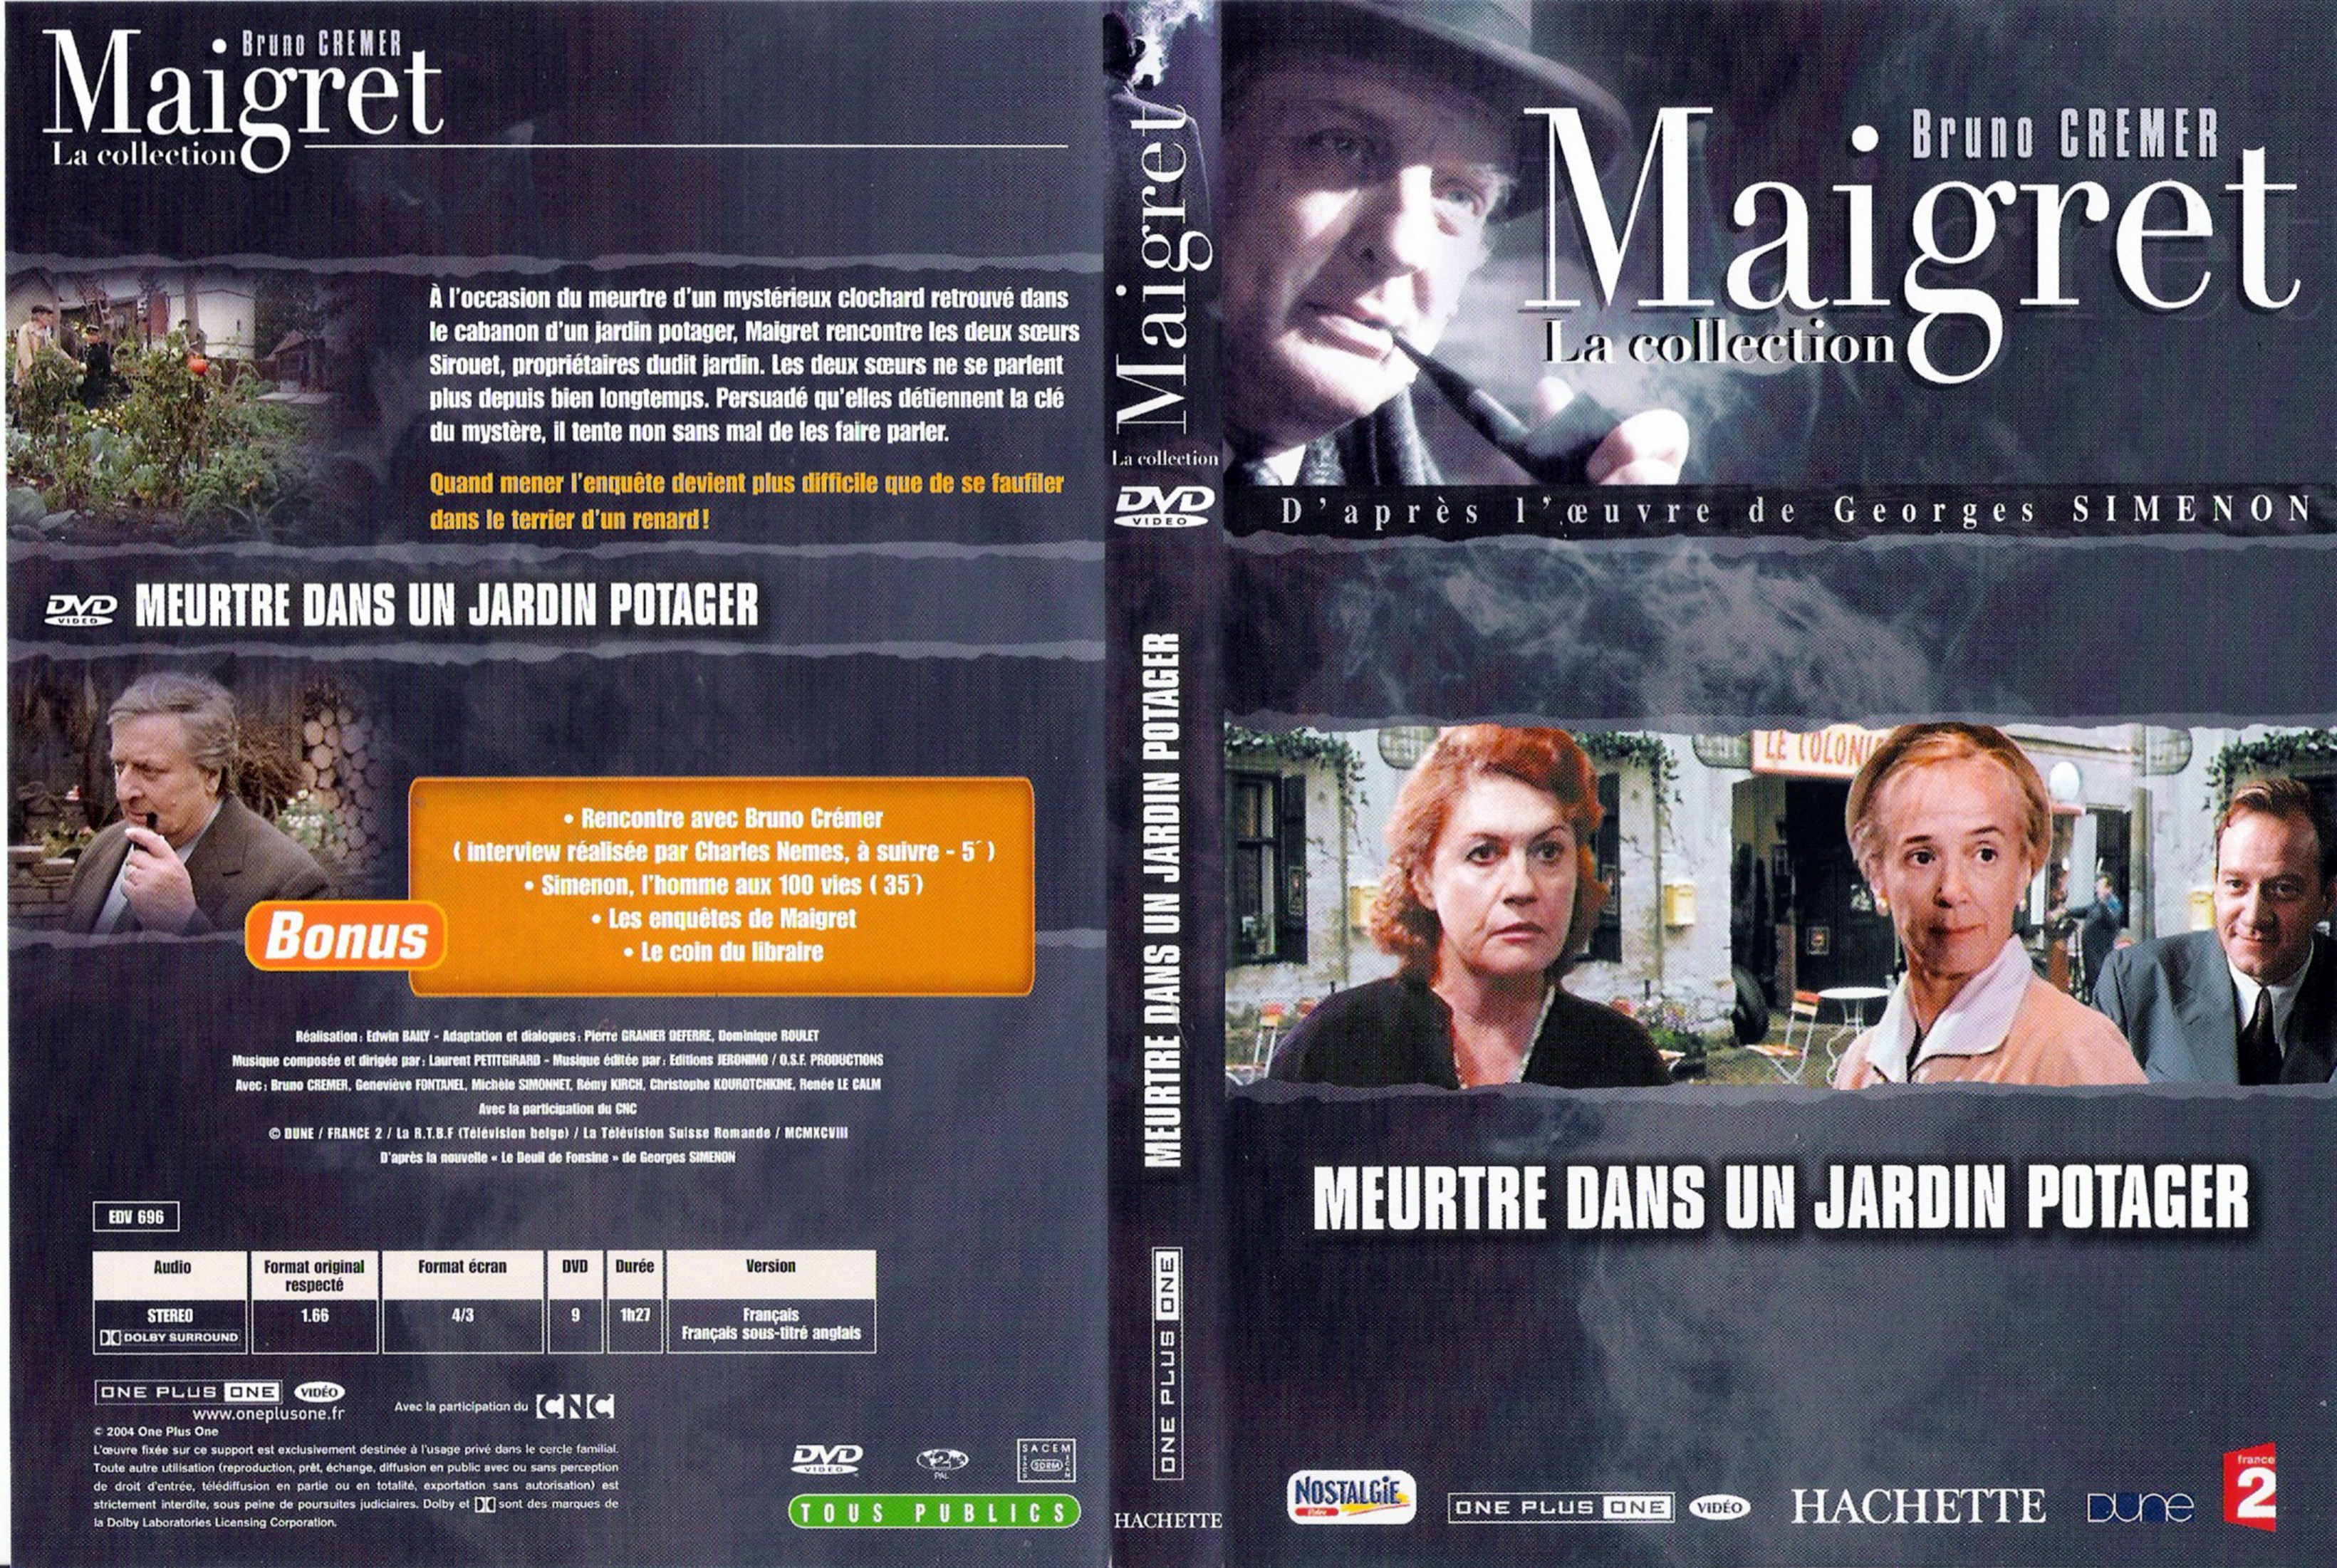 Jaquette DVD Maigret Meurtre dans un jardin potager (Bruno Cremer)